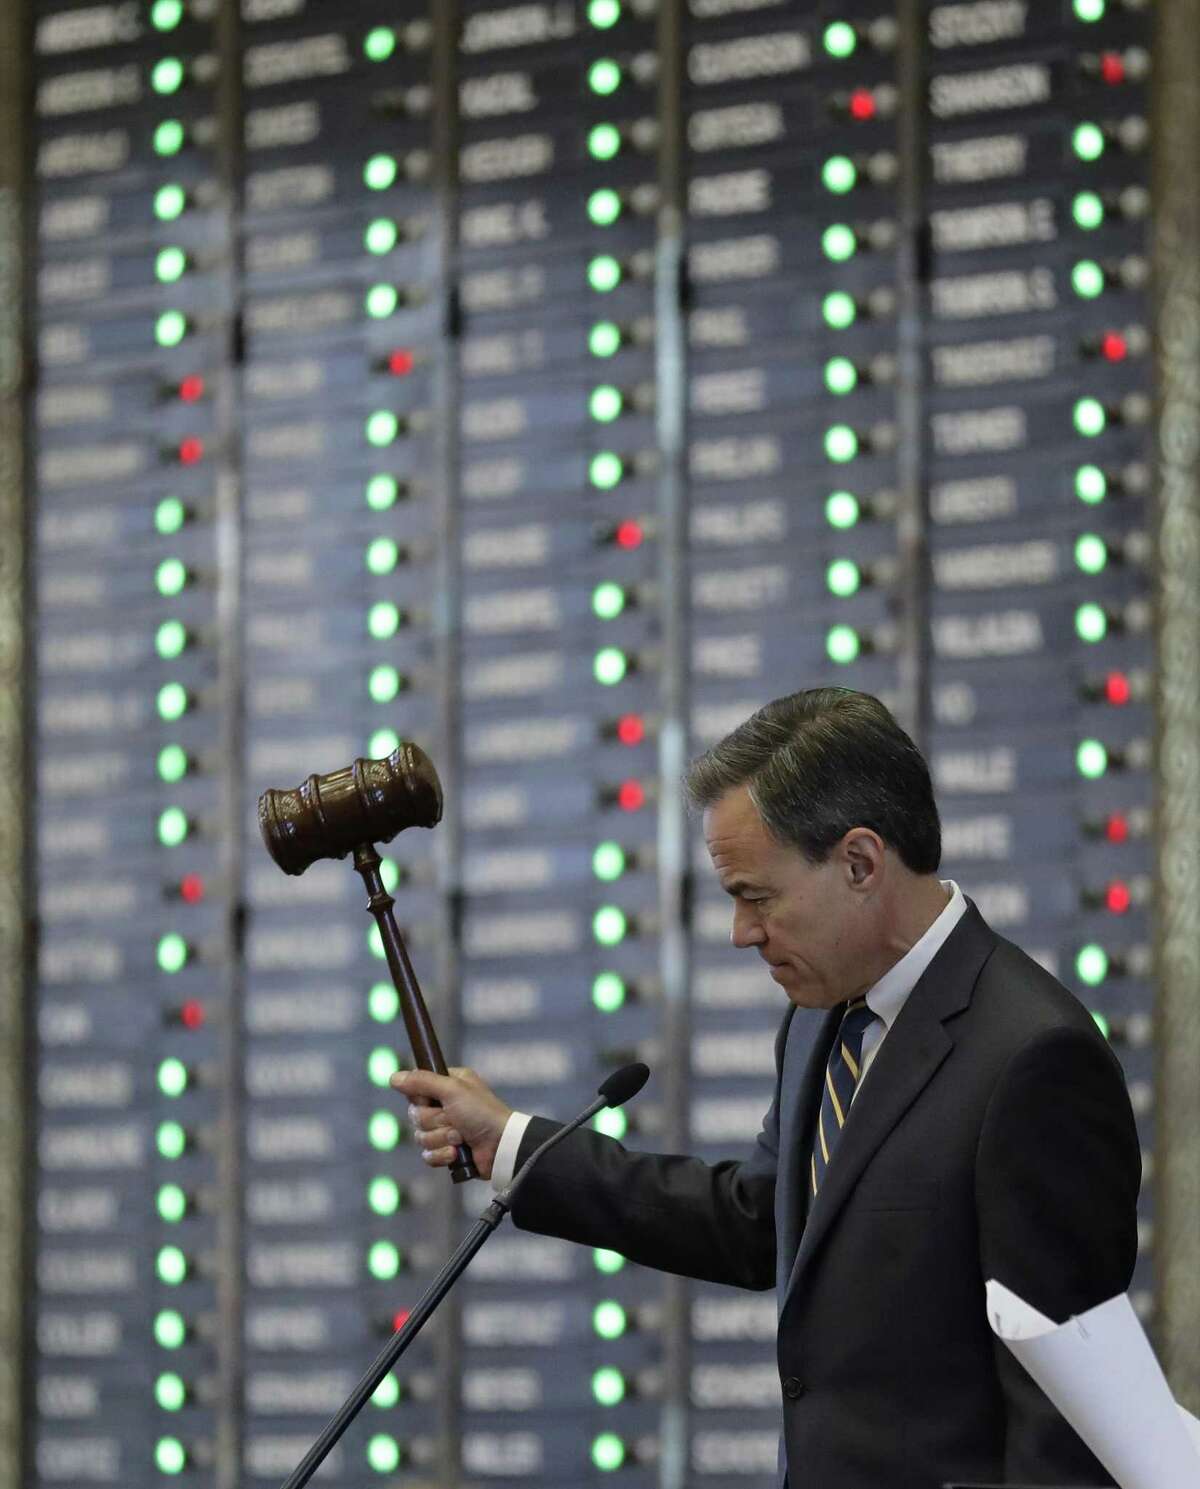 Texas Speaker of the House Joe Straus, R-San Antonio, strikes his gavel during debates in the House, Wednesday, April 19, 2017, in Austin, Texas, where debate over school finance is set to begin. (AP Photo/Eric Gay)